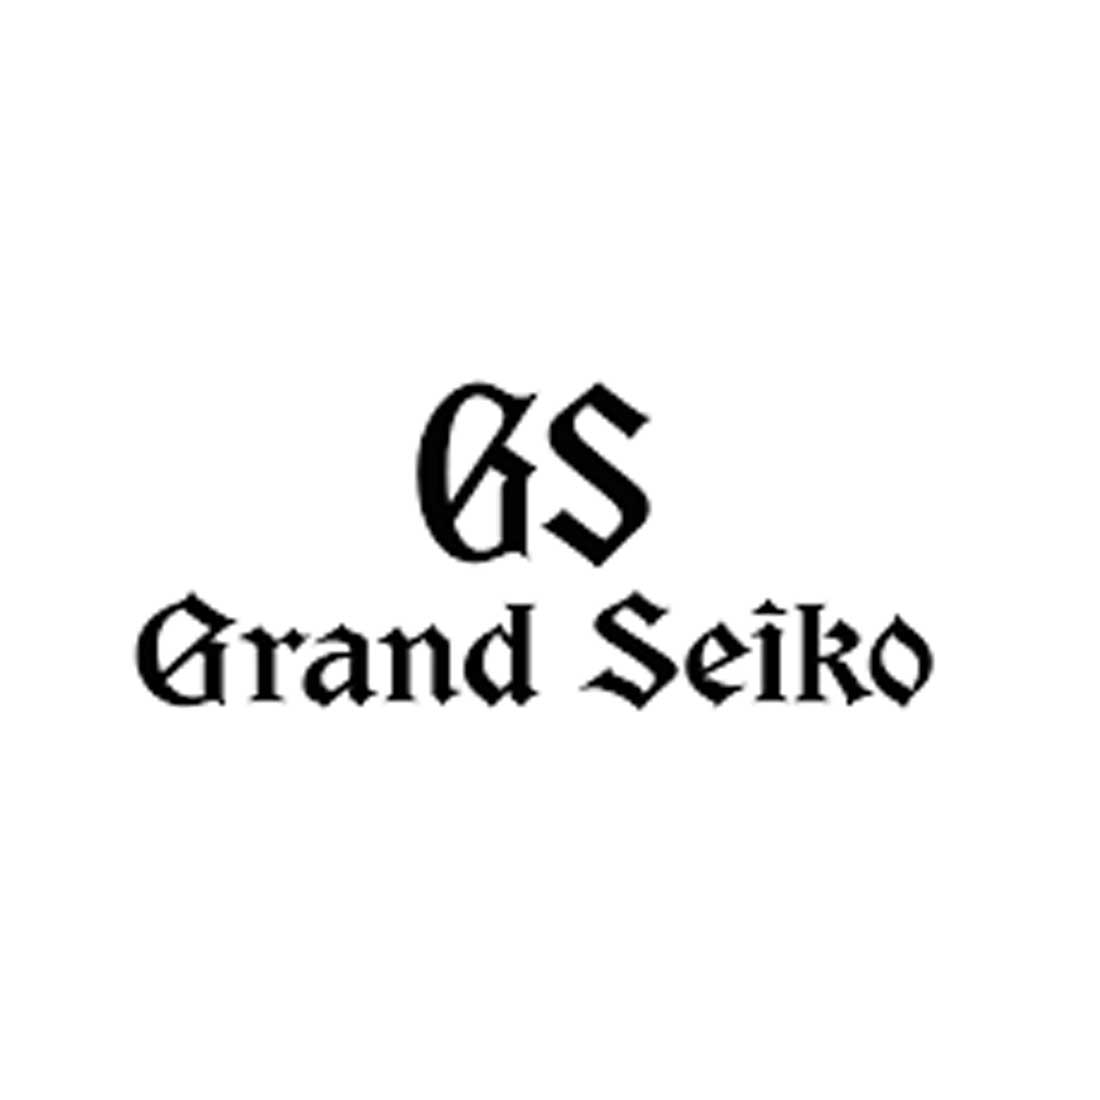 Grand Seiko, les origines et les premières heures 